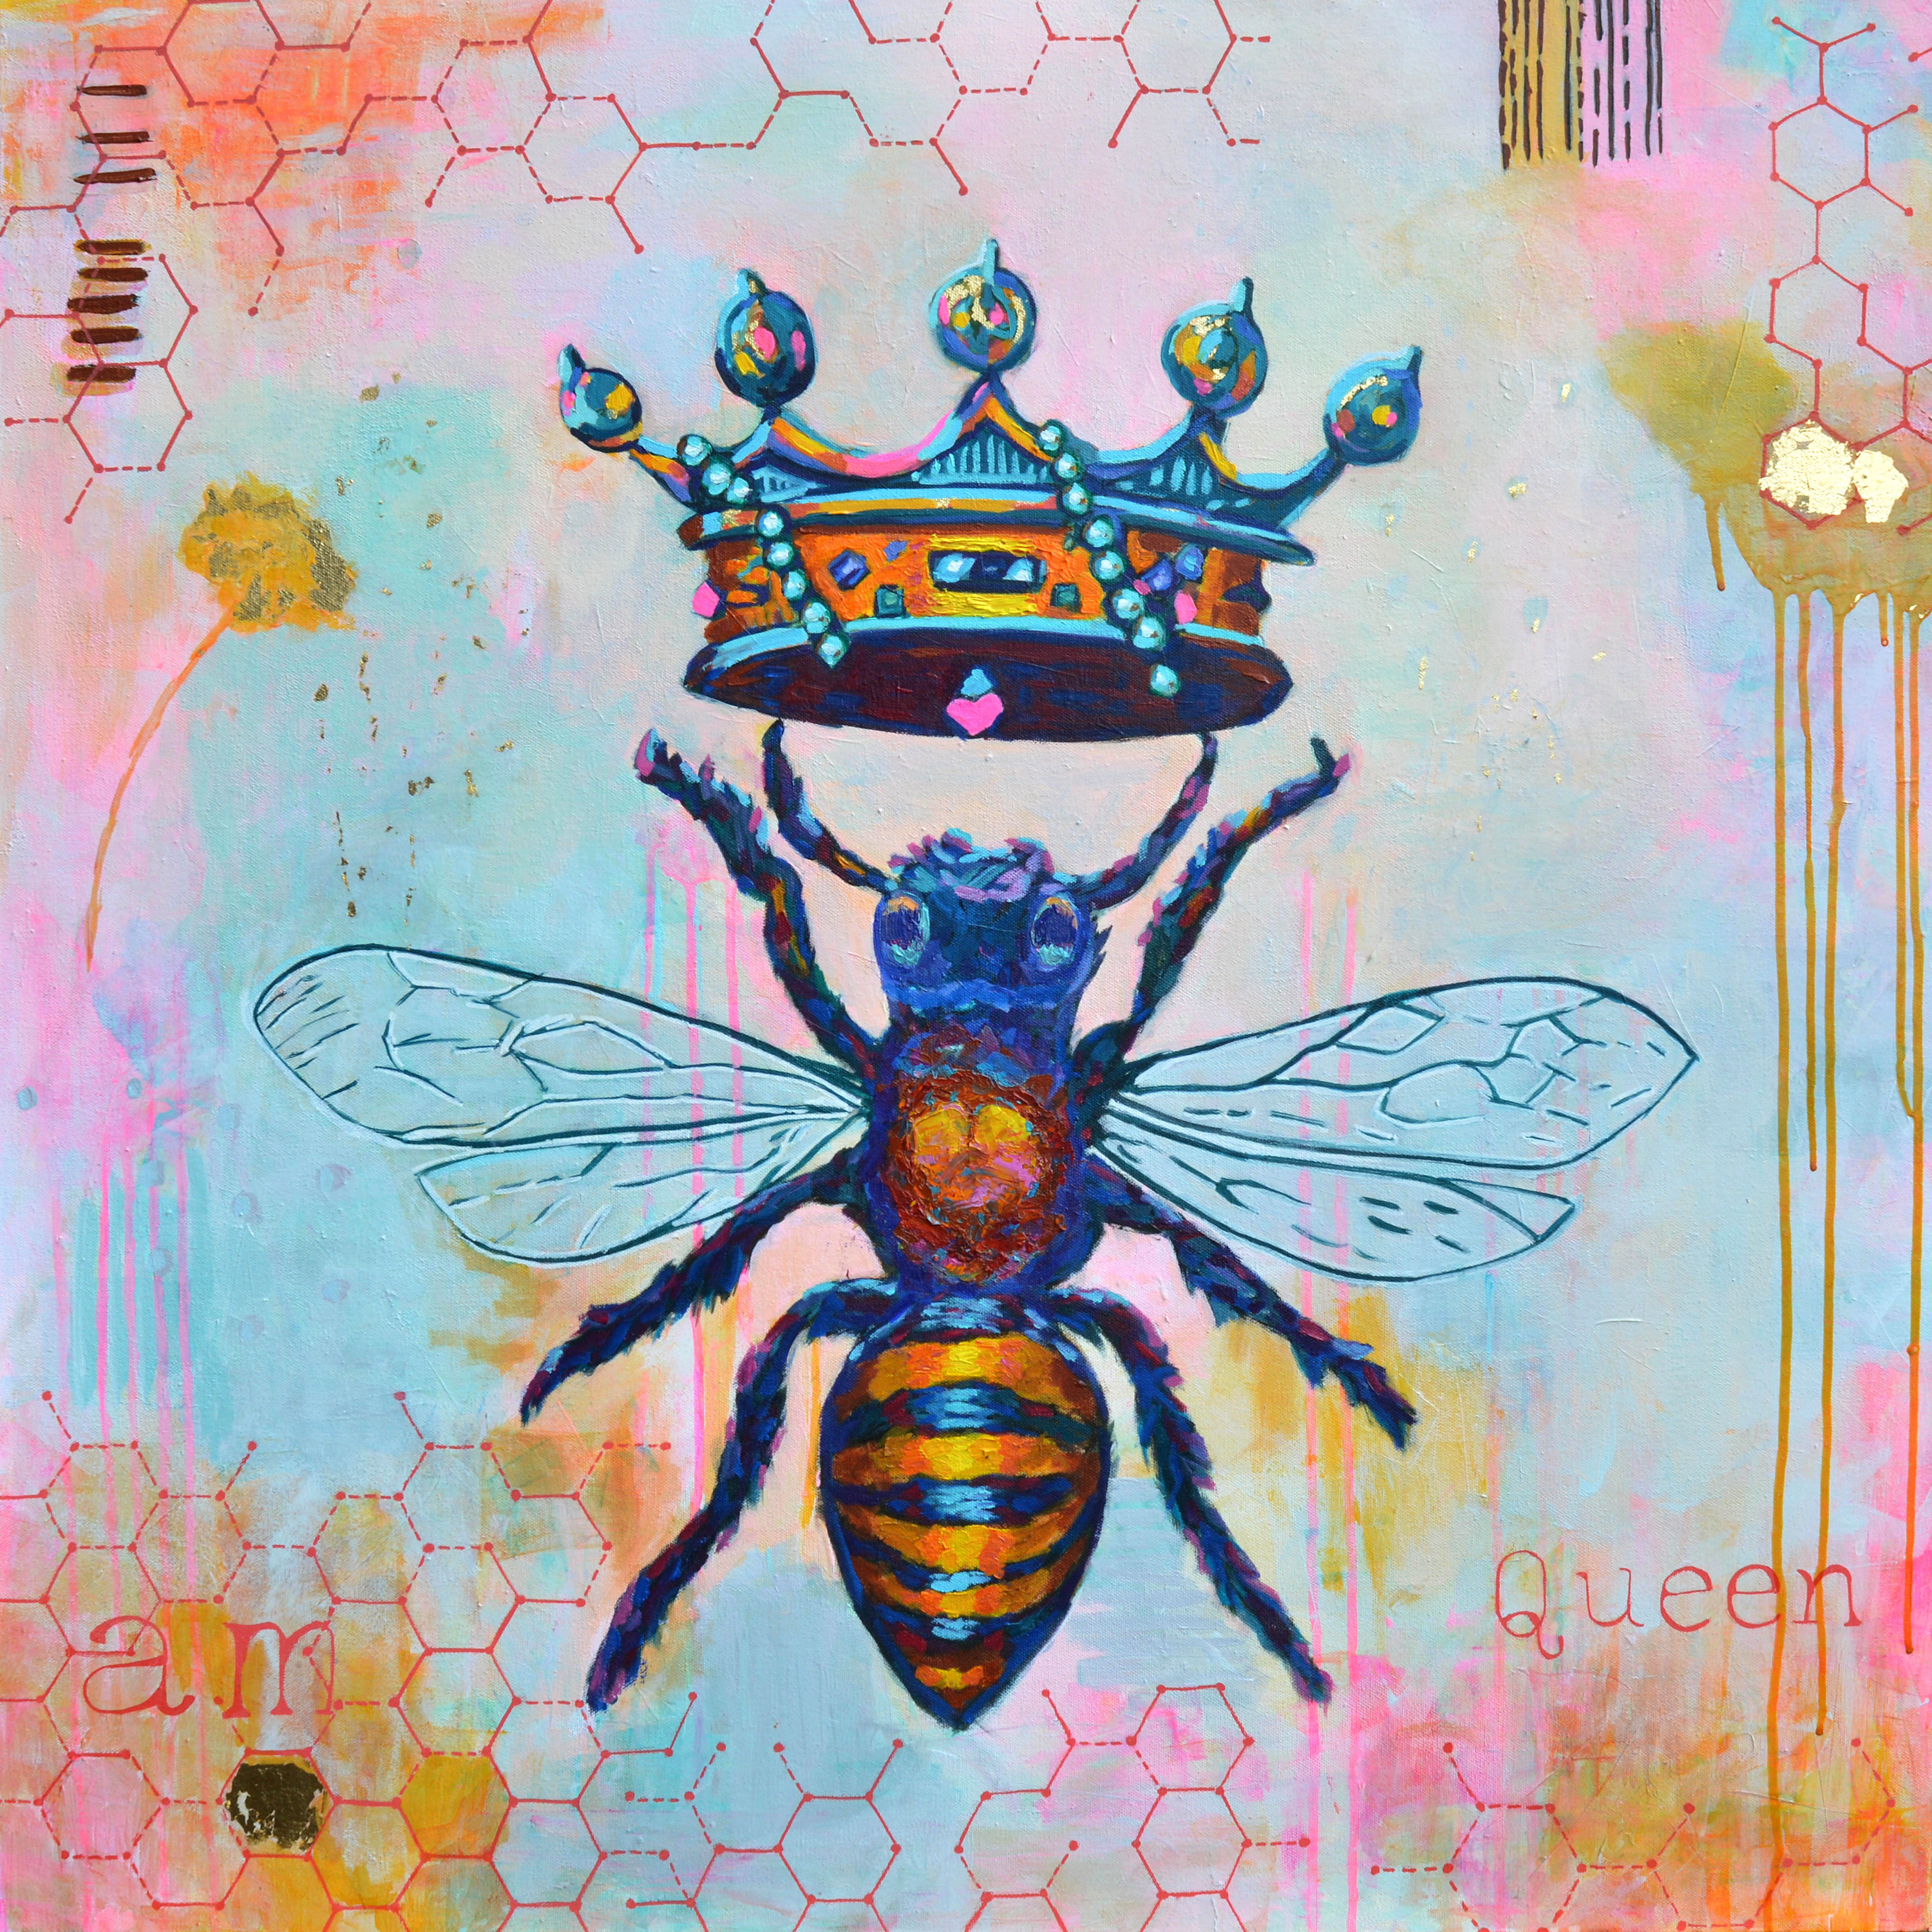 Queen bee fine art print gabriela ortiz hih4ve